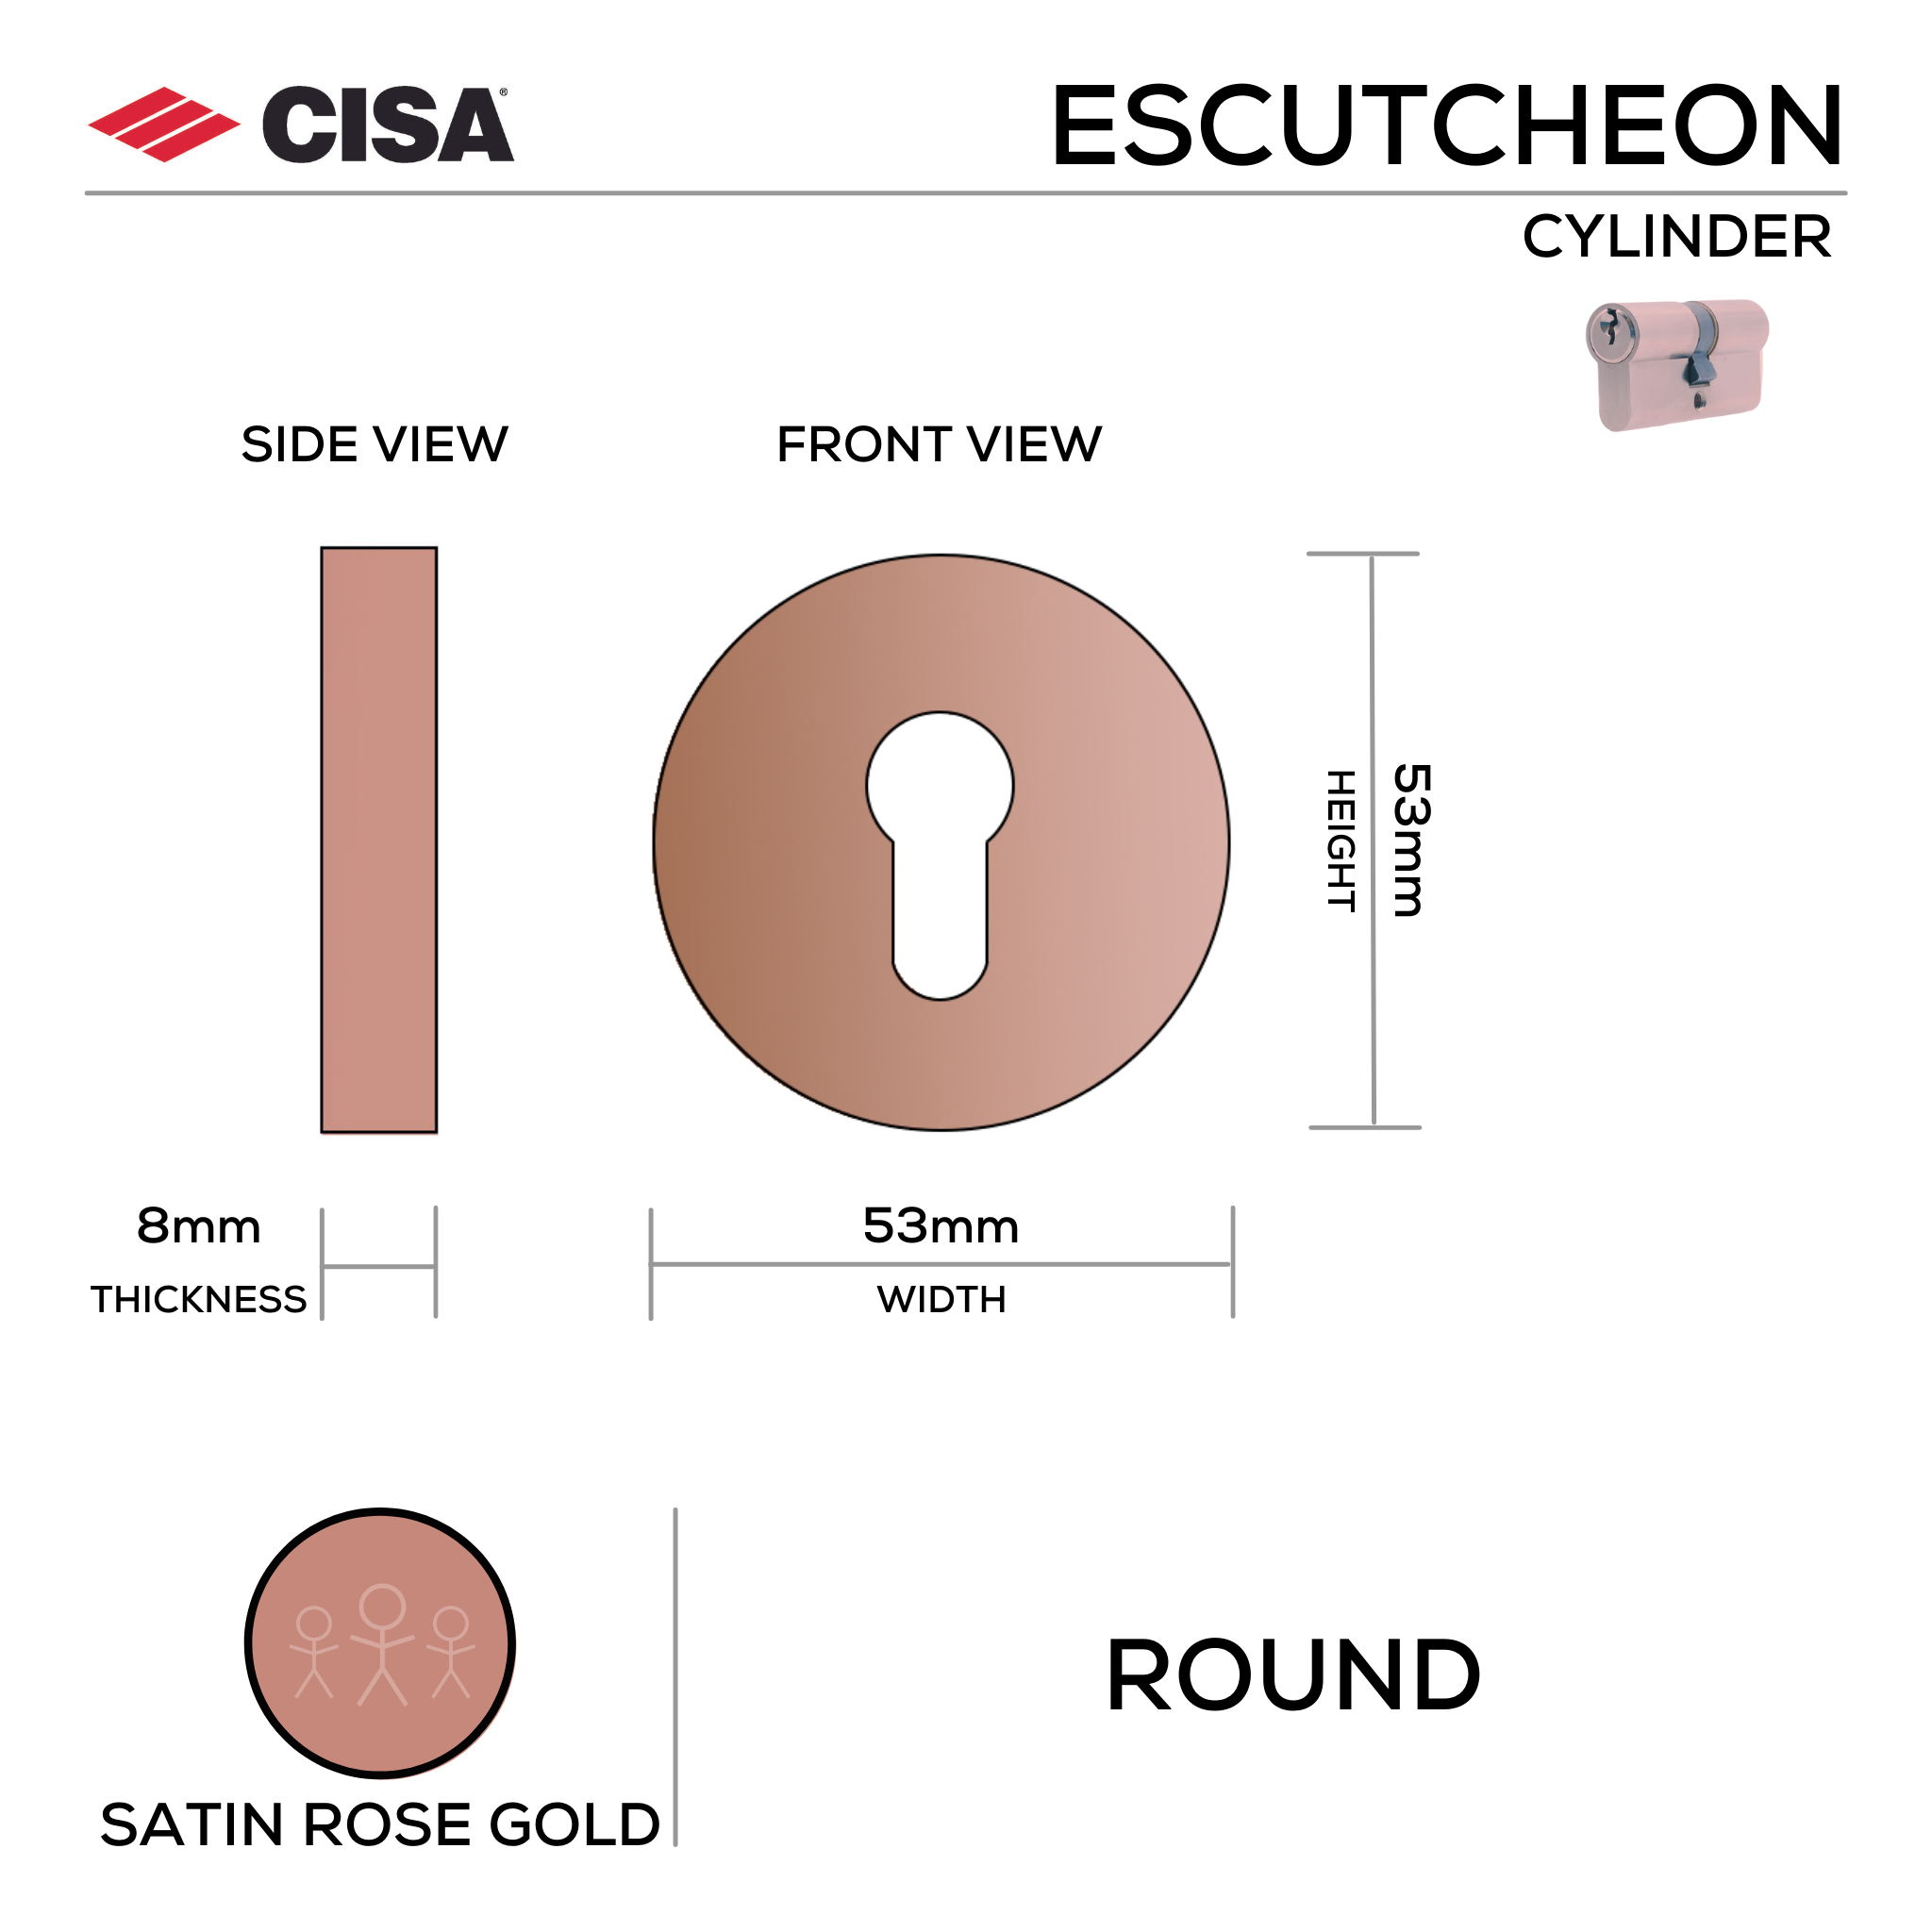 FE.R.C.SRG, Cylinder Escutcheon, Round Rose, 53mm (h) x 53mm (w) x 8mm (t), Satin Rose Gold, CISA